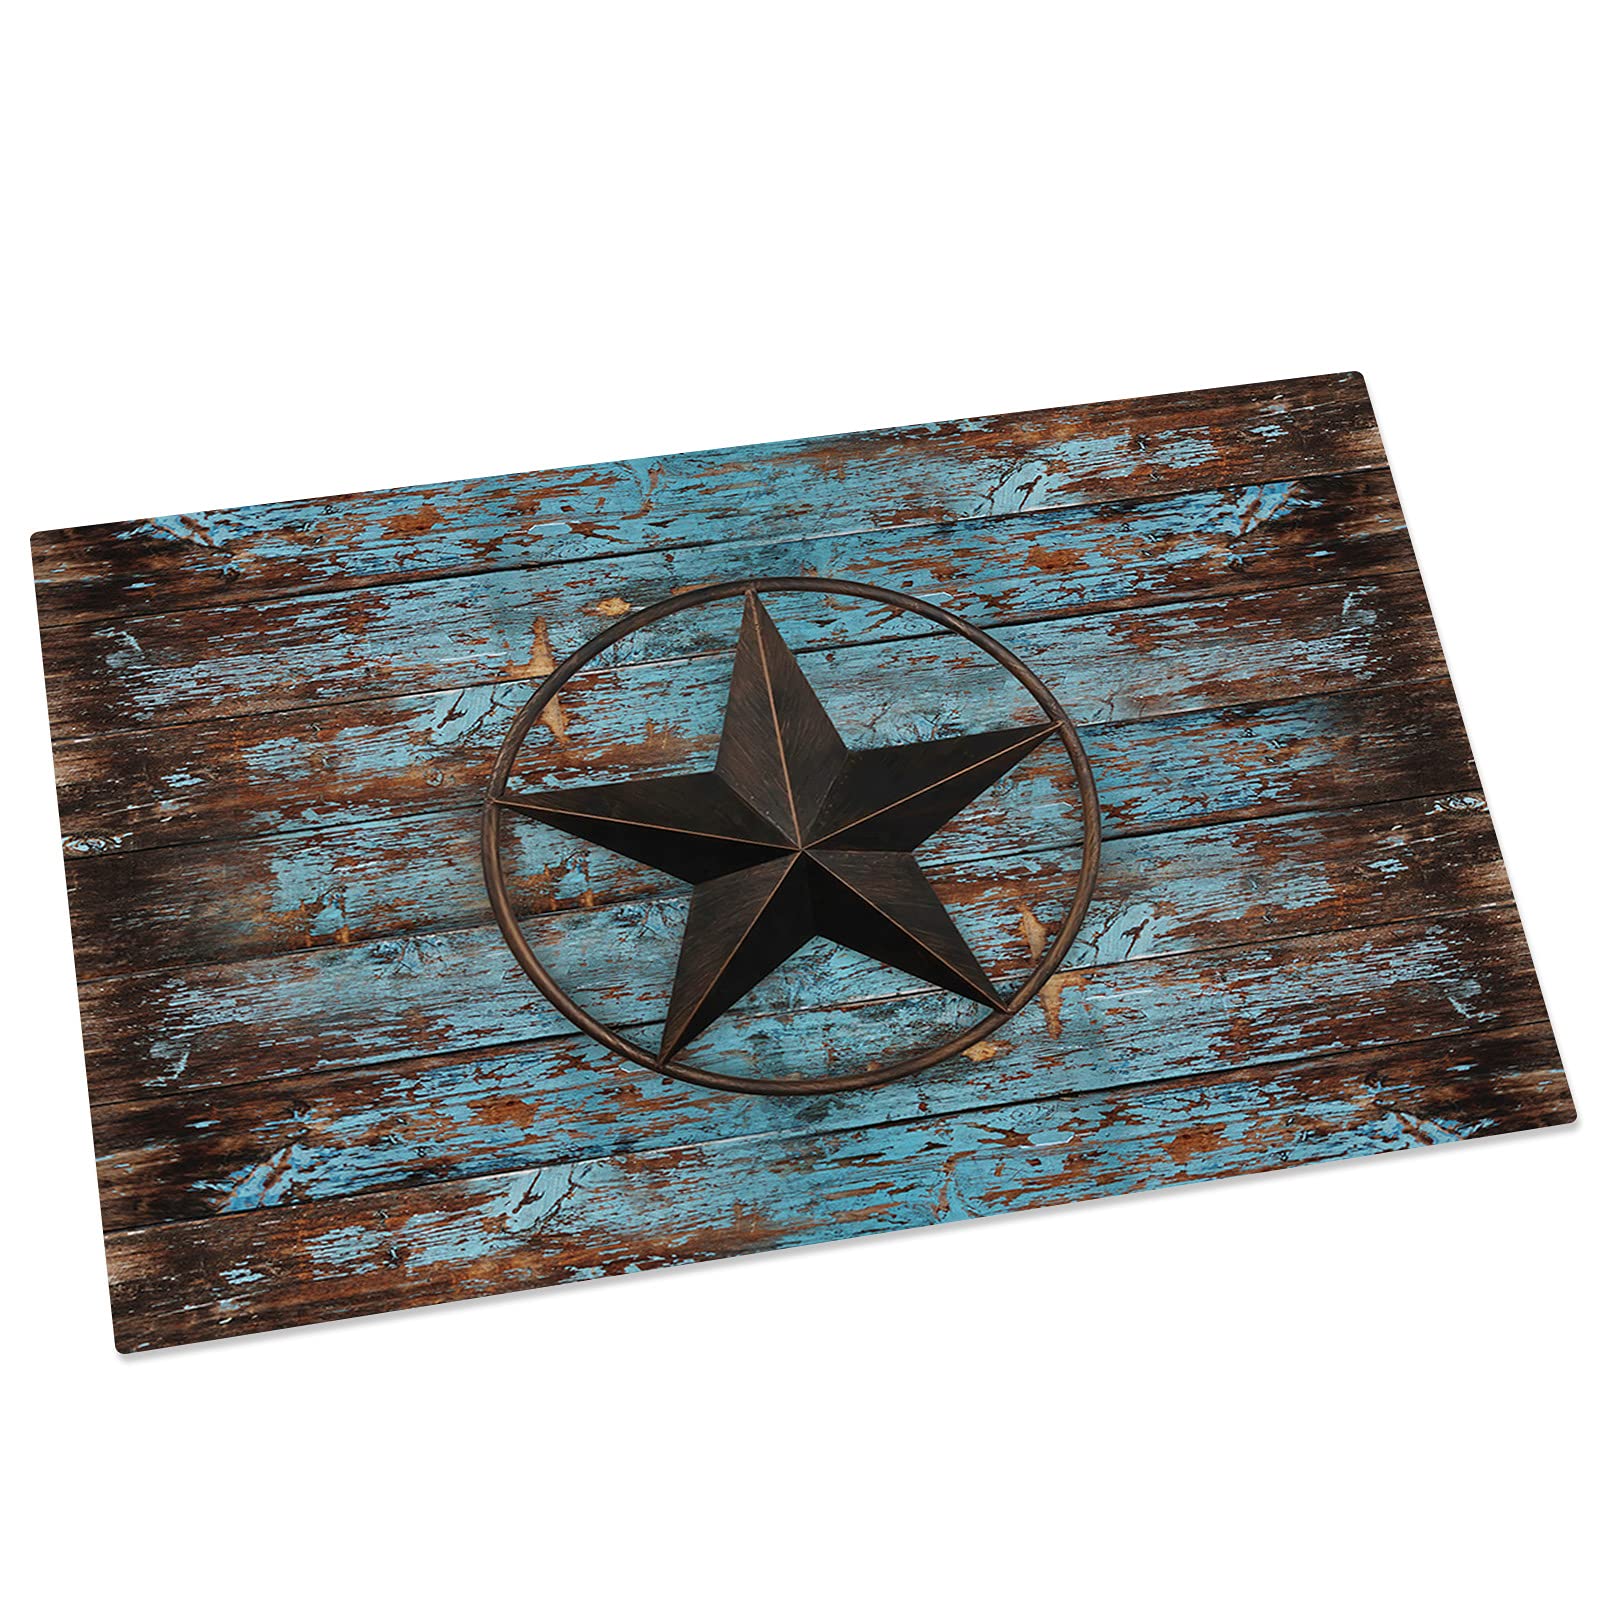 Welcome Doormat Western Country Star Texas Vintage Blue Wood Board,Non Slip Indoor Floor Mat Bath Rug,Rustic Wooden Grain Entrance Carpet for Bedroom Kitchen Living Room Bathroom Decor 16x24In